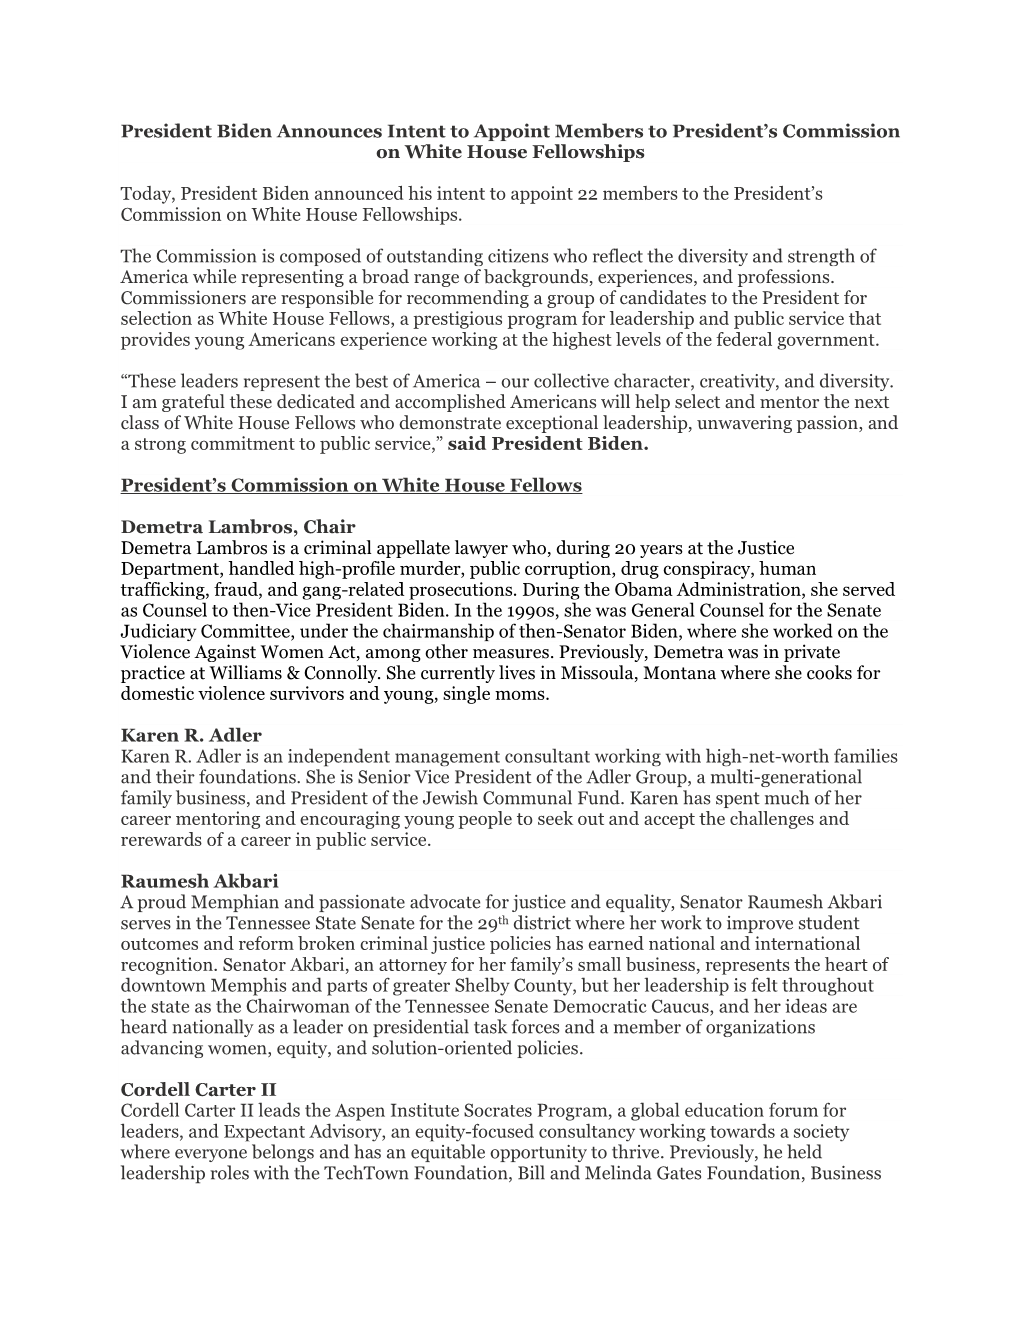 President's Commission on White House Fellowships